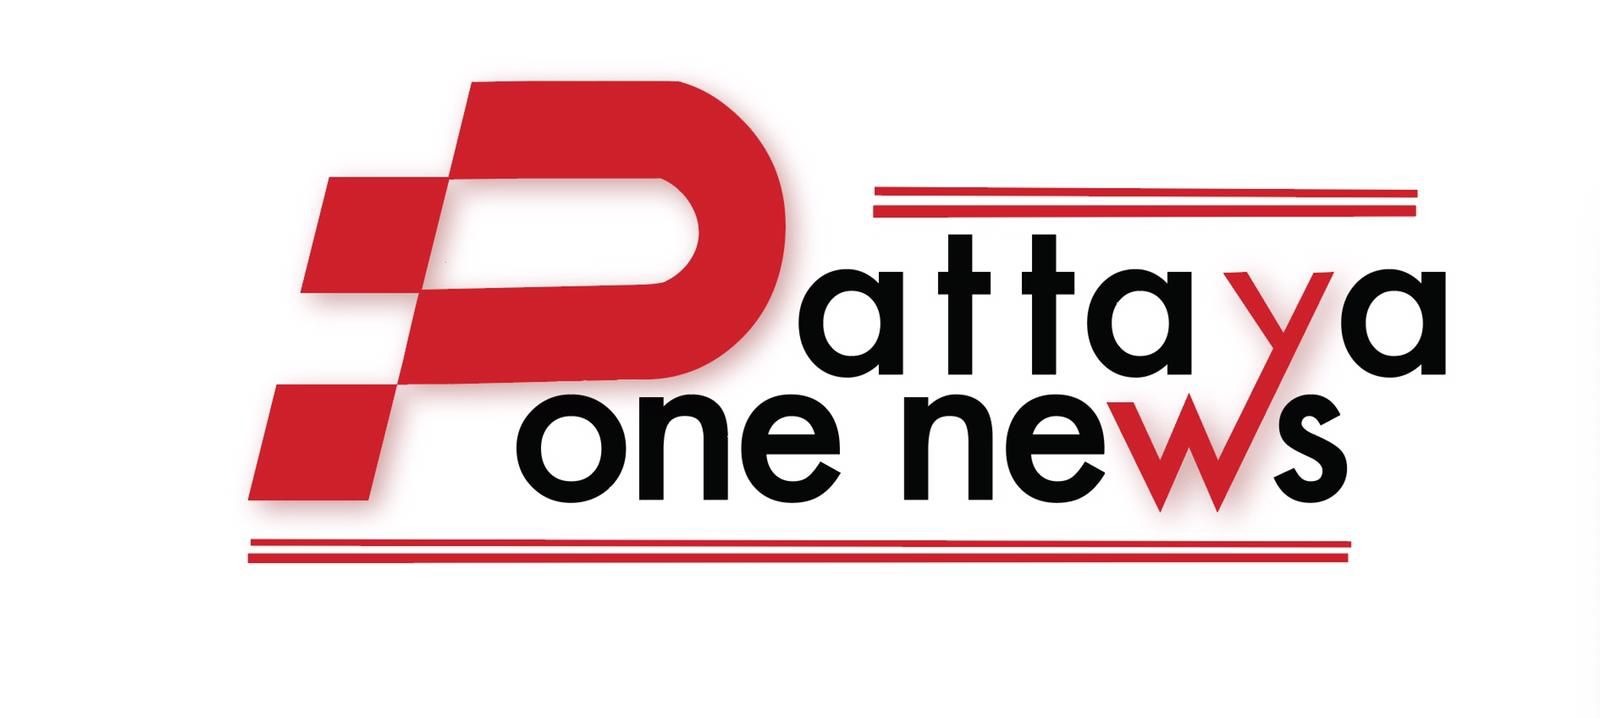 Pattaya One News